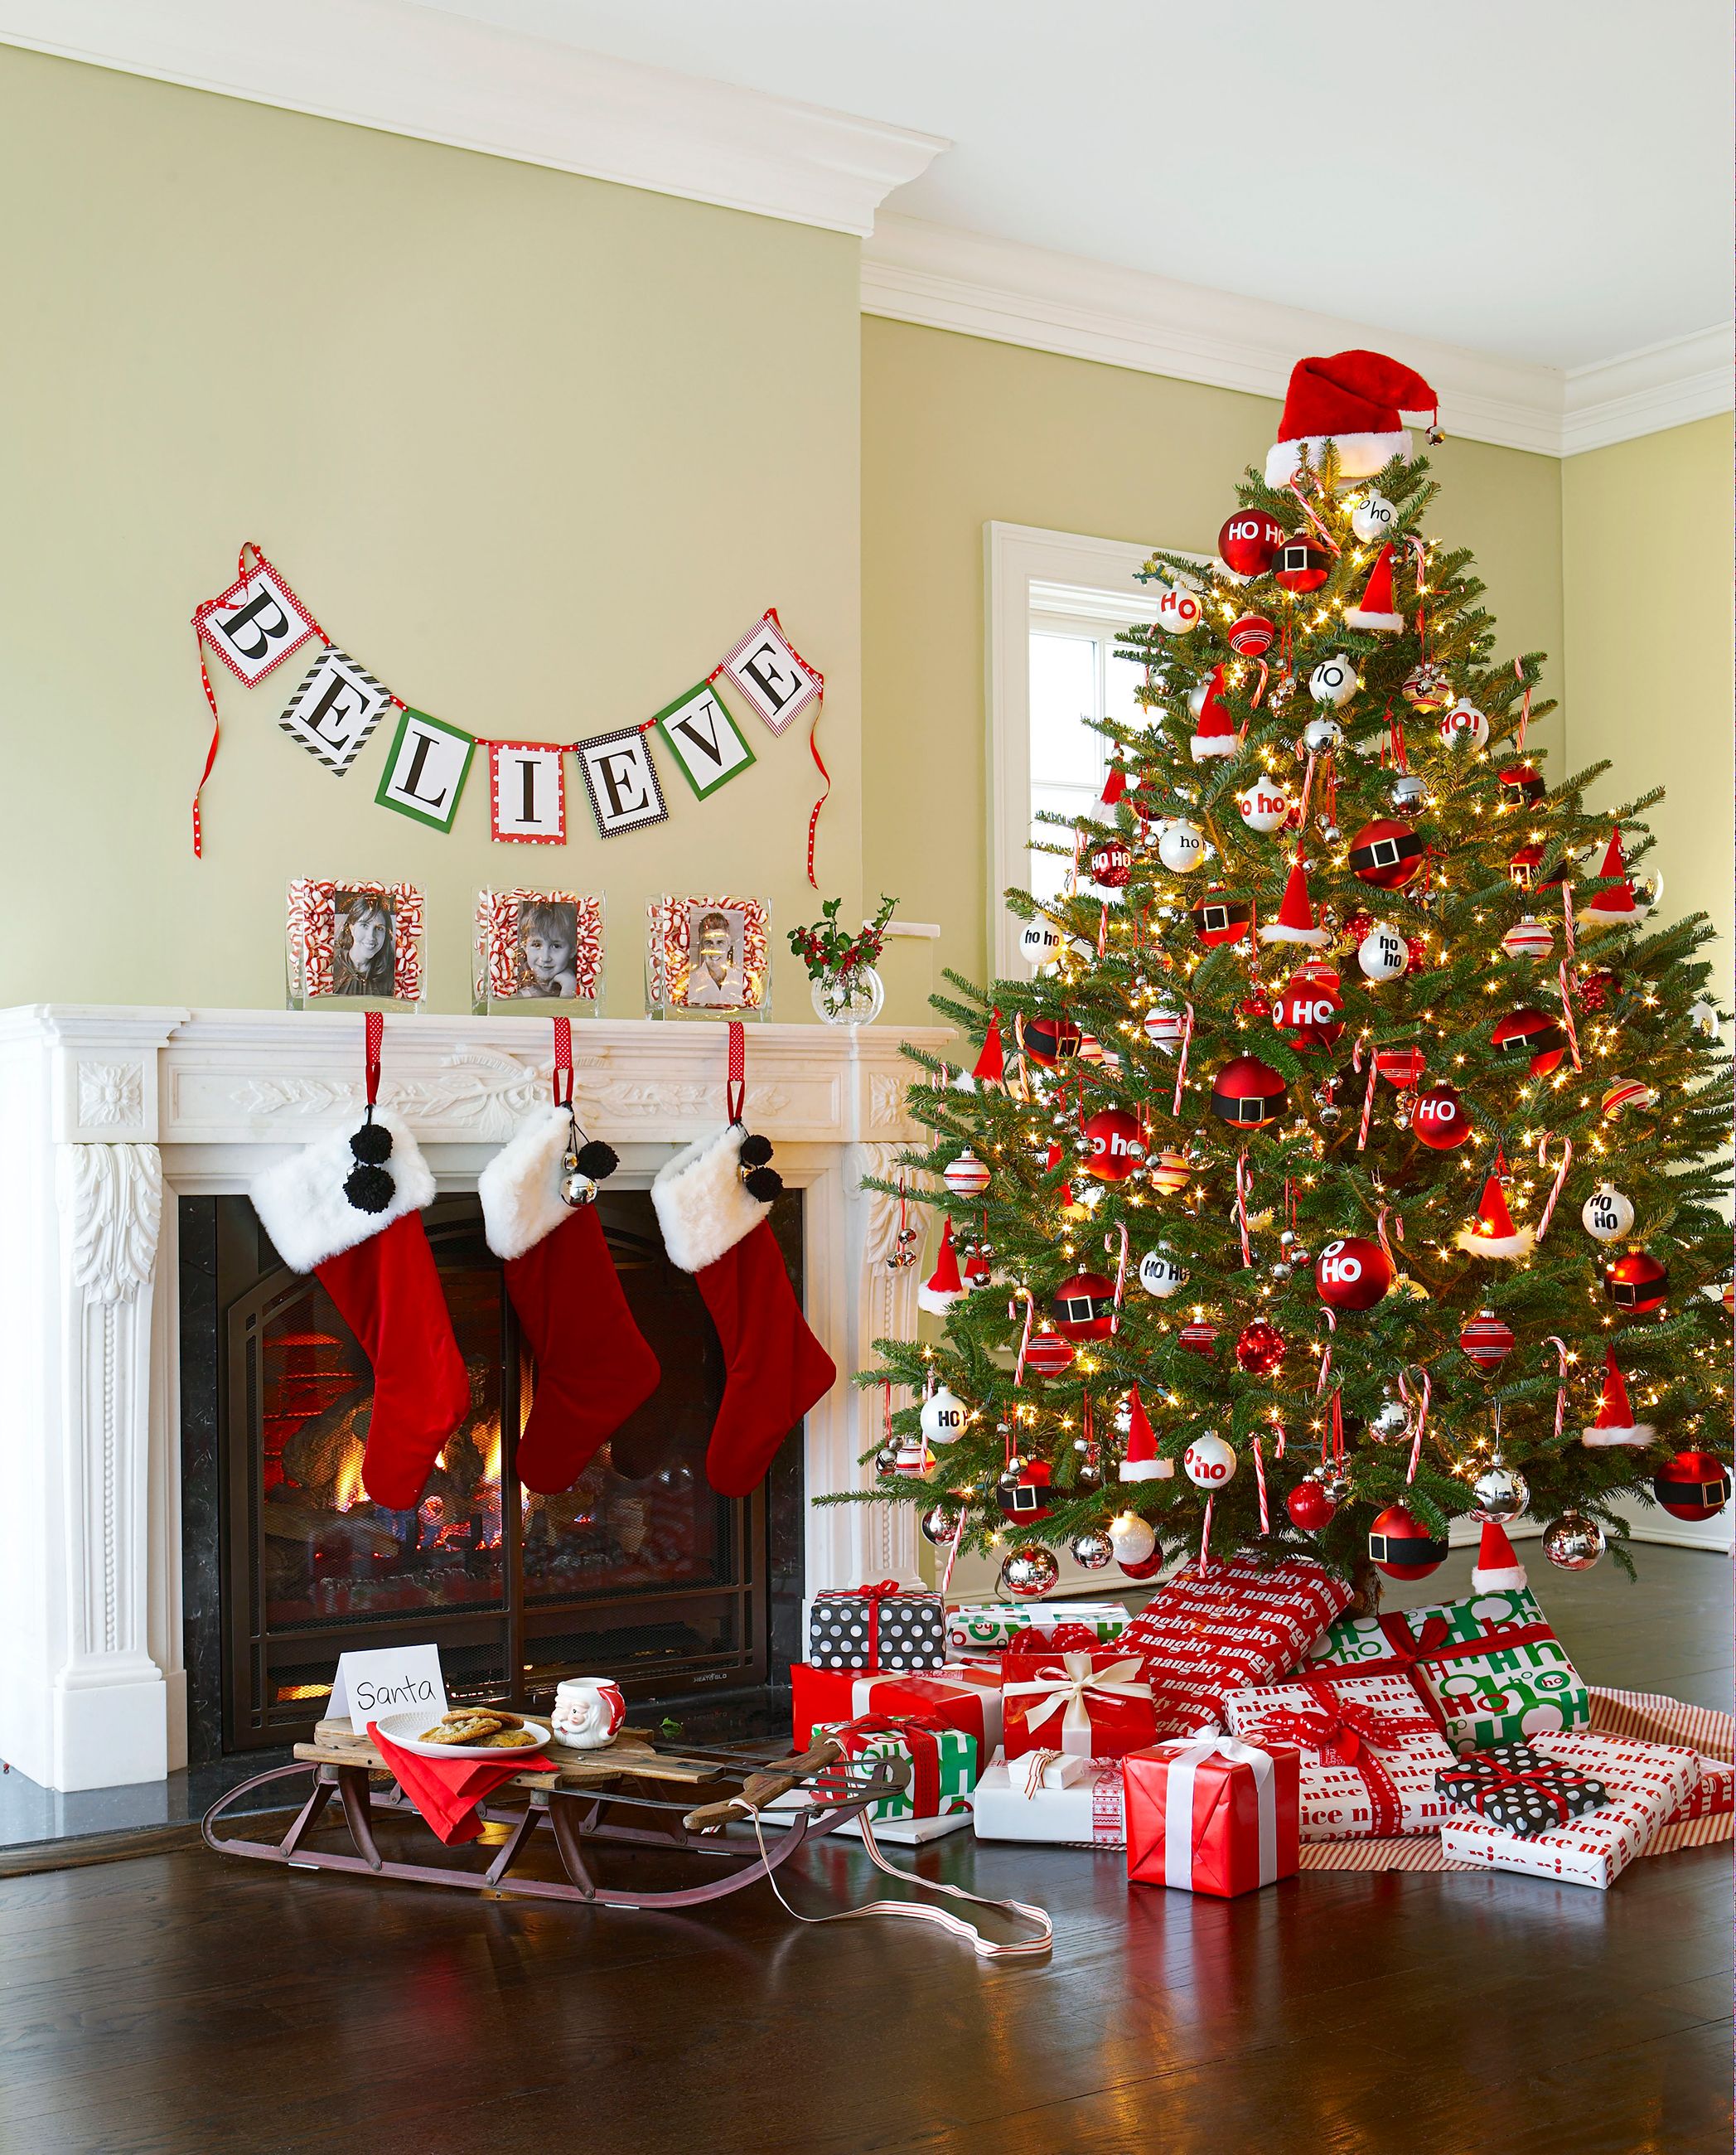 Mini-stockings Crochet in Hogwarts House Colors Holiday Christmas Ornaments & Decor